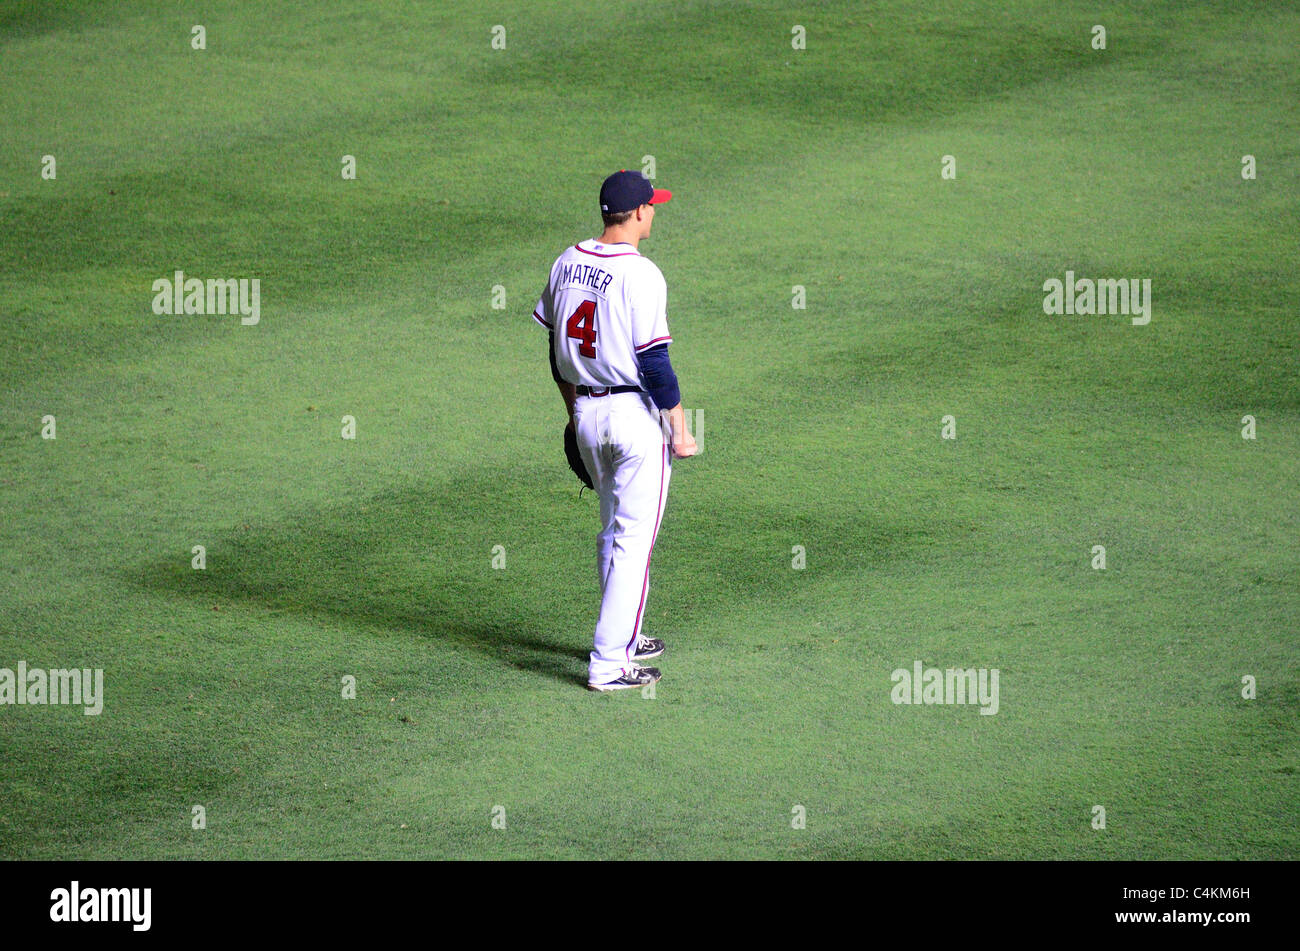 Atlanta, Georgia - June 16, 2011: Joe Mather of the Atlanta Braves Baseball Team. Stock Photo